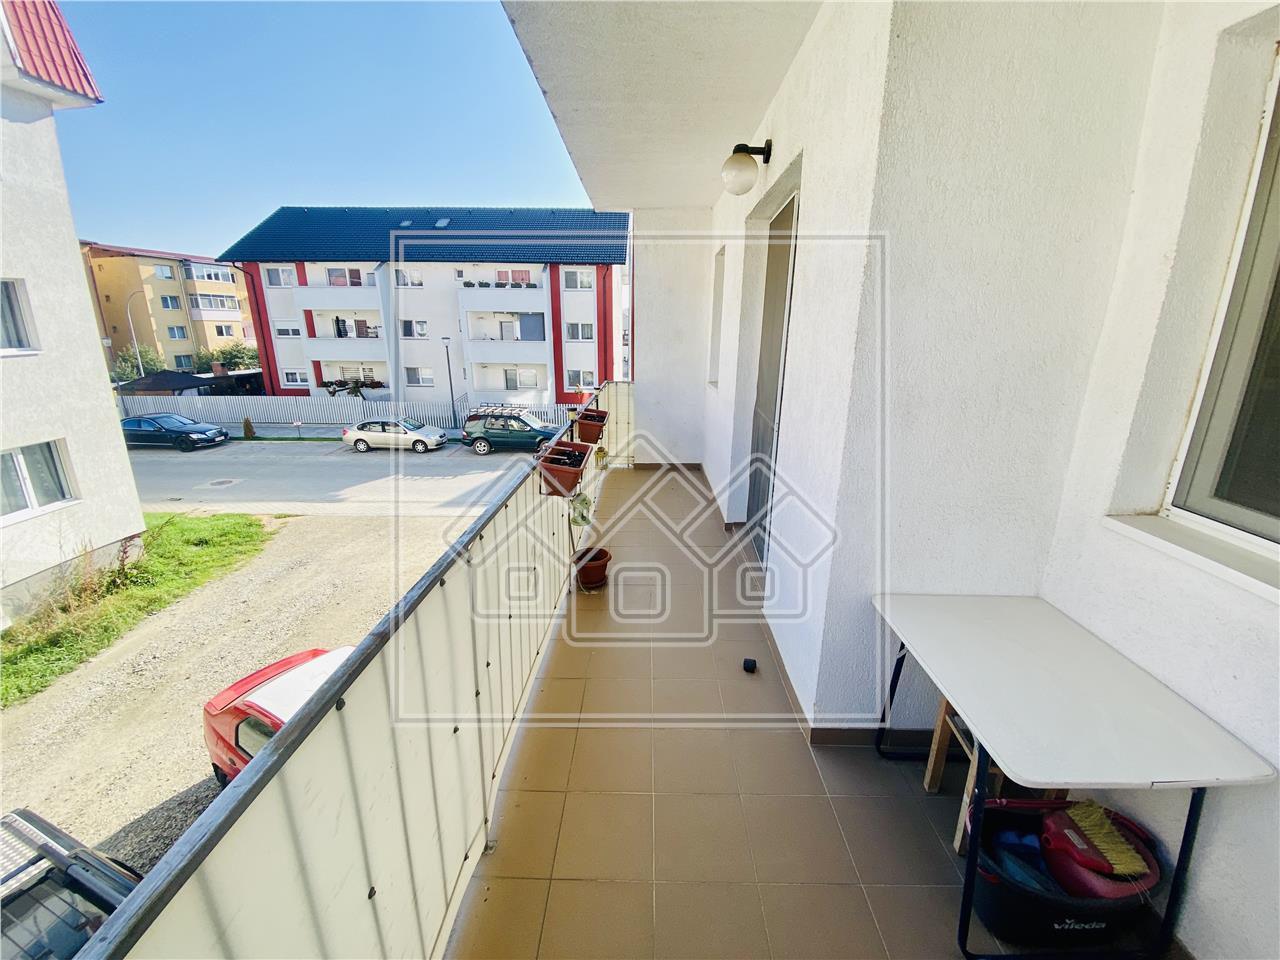 Apartament de vanzare in Sibiu-2 camere si balcon-Etaj 1/3-Selimbar